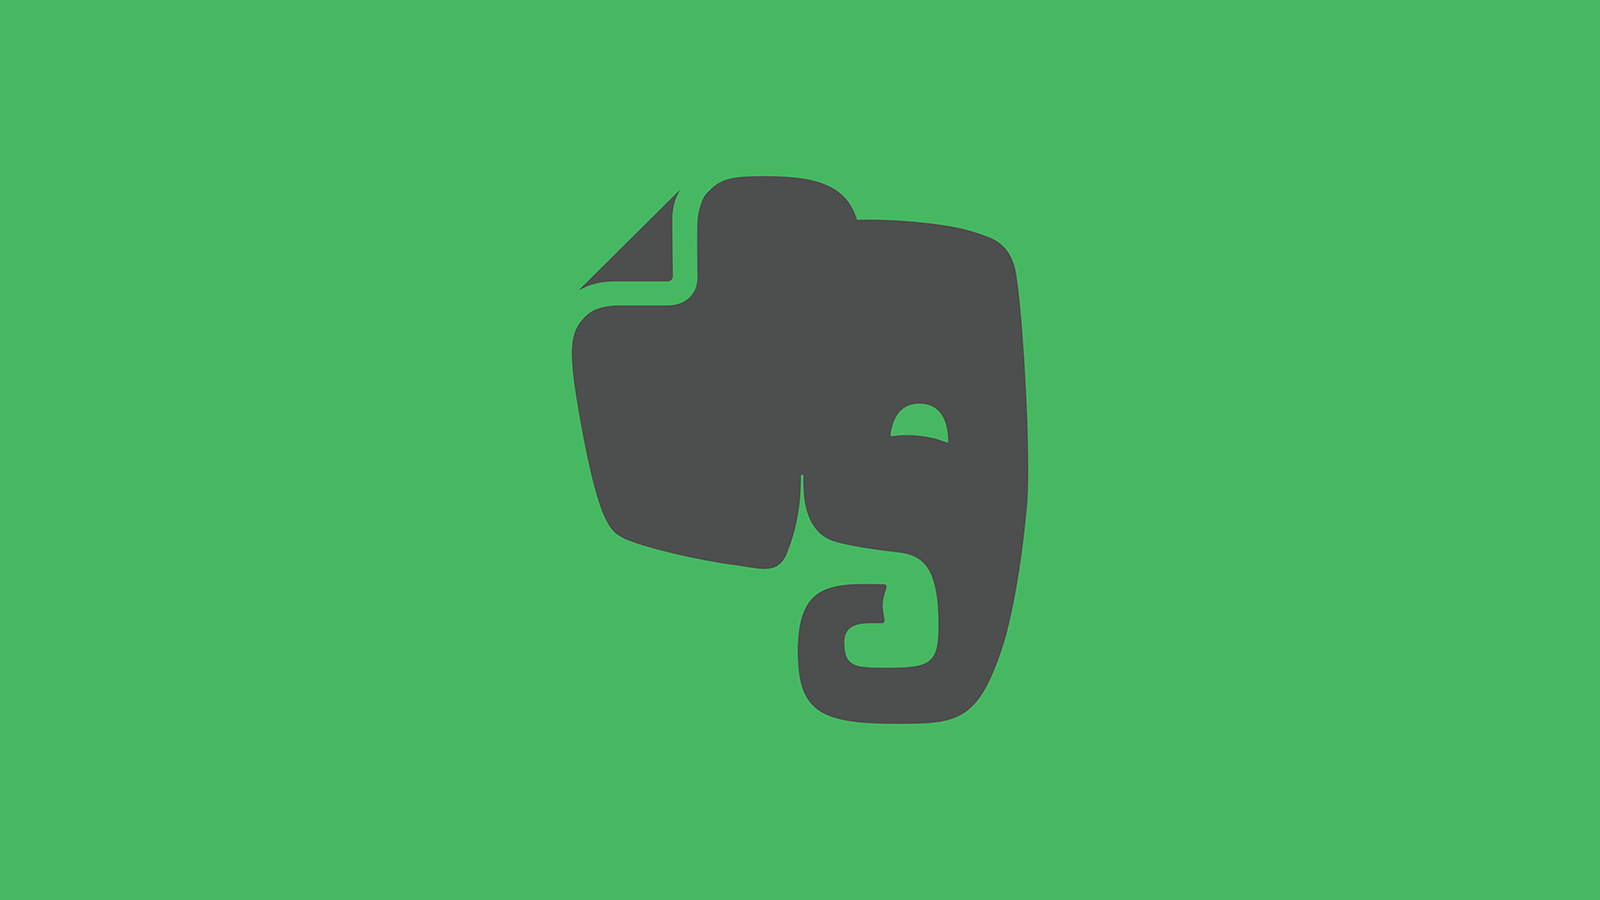 Evernote Logo - Turning an Elephant | Evernote | Evernote Blog